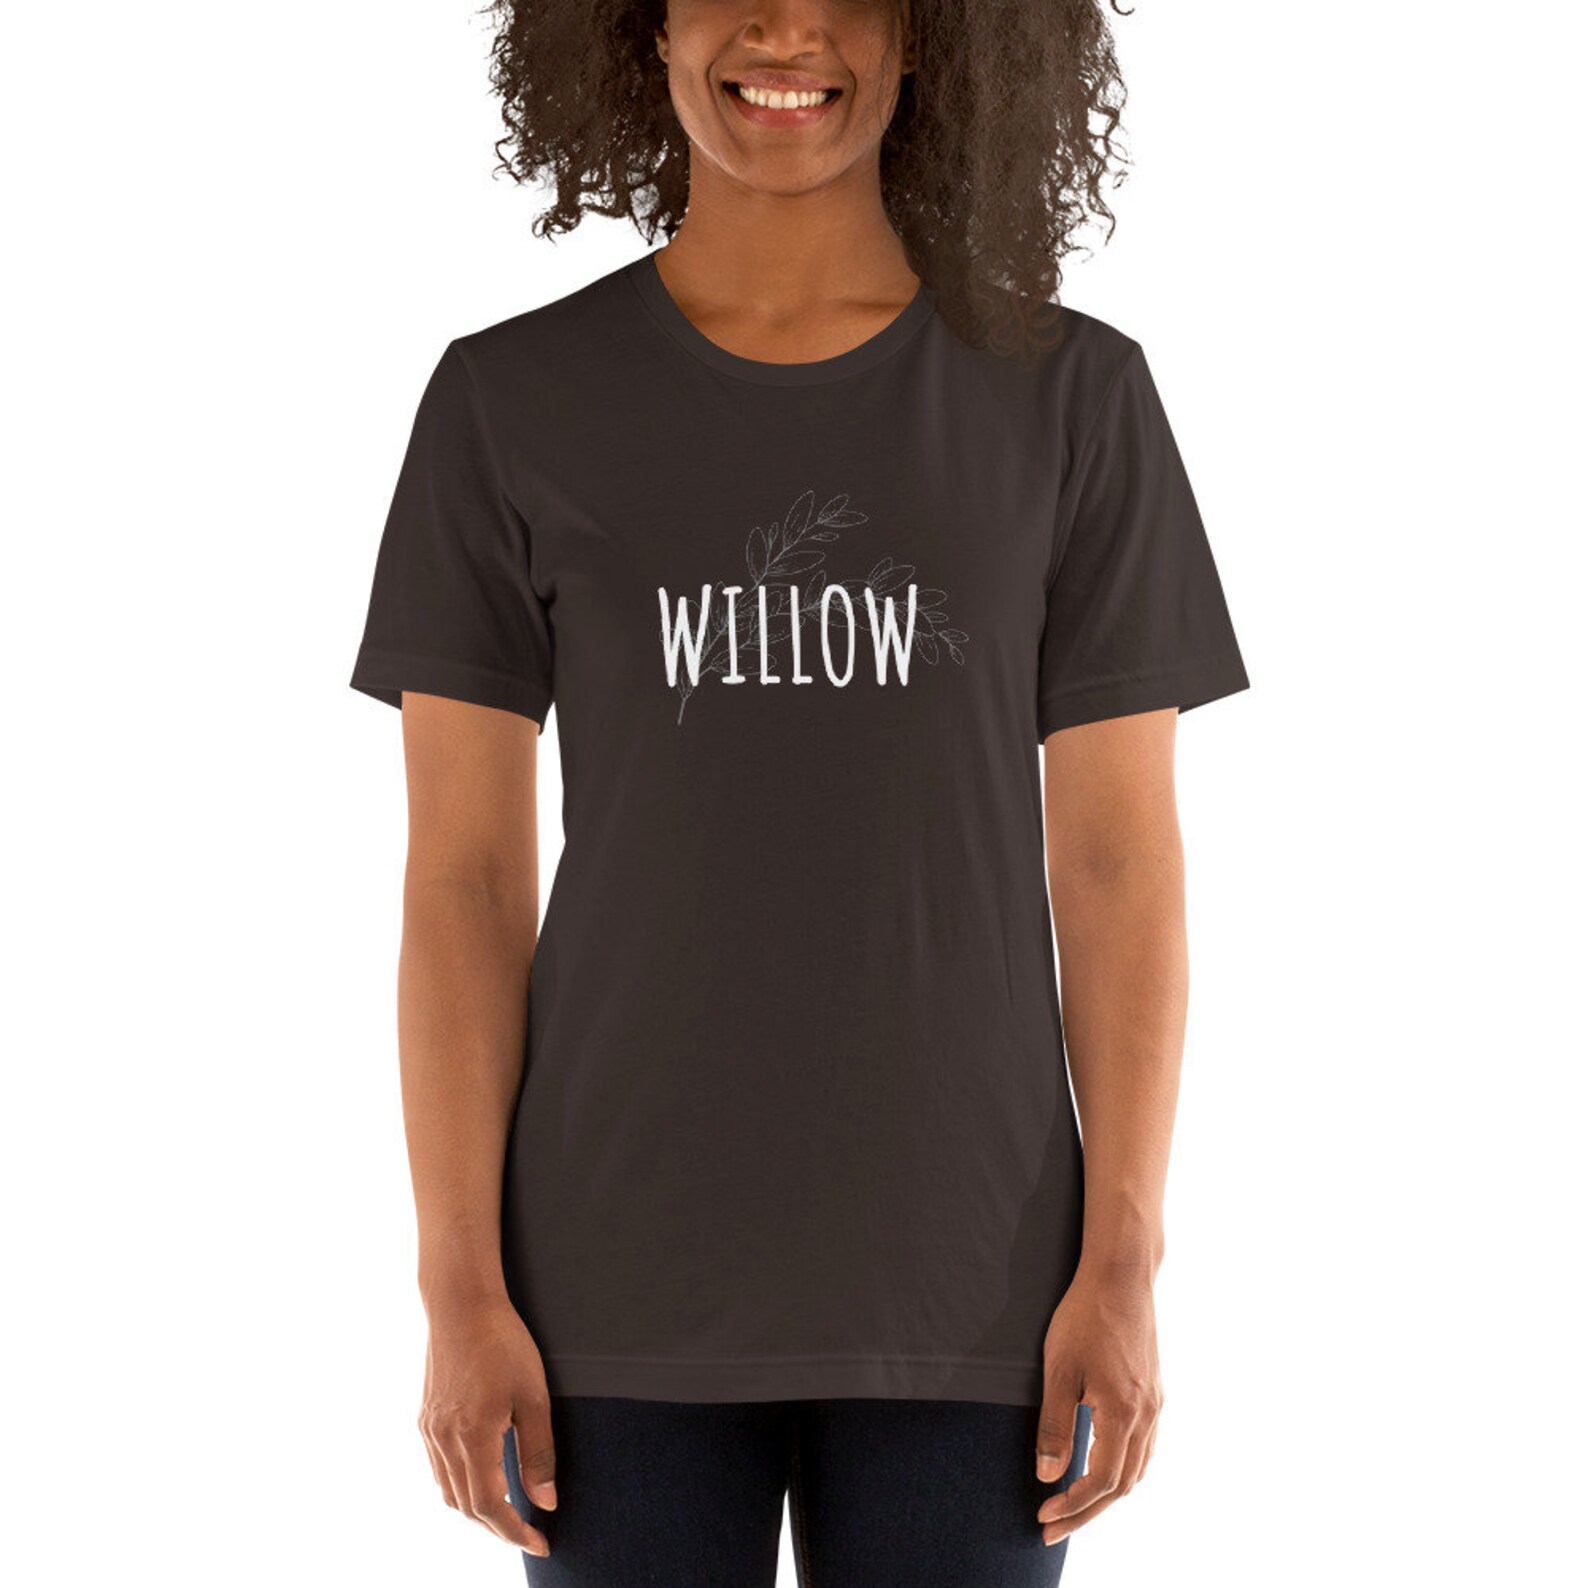 WILLOW Short-Sleeve Unisex T-Shirt | Etsy